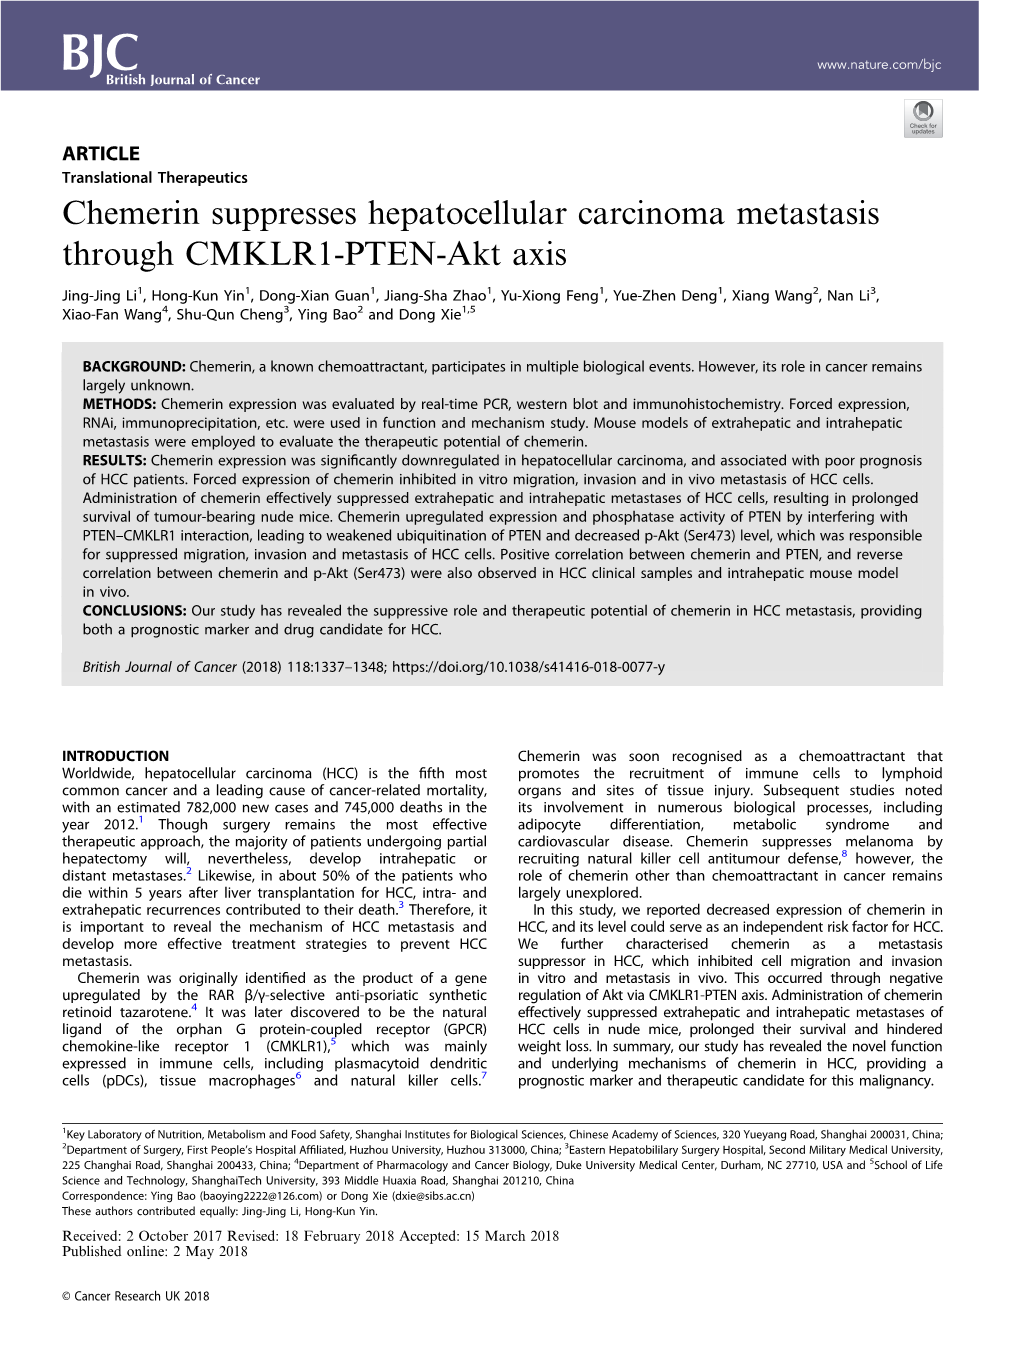 Chemerin Suppresses Hepatocellular Carcinoma Metastasis Through CMKLR1-PTEN-Akt Axis